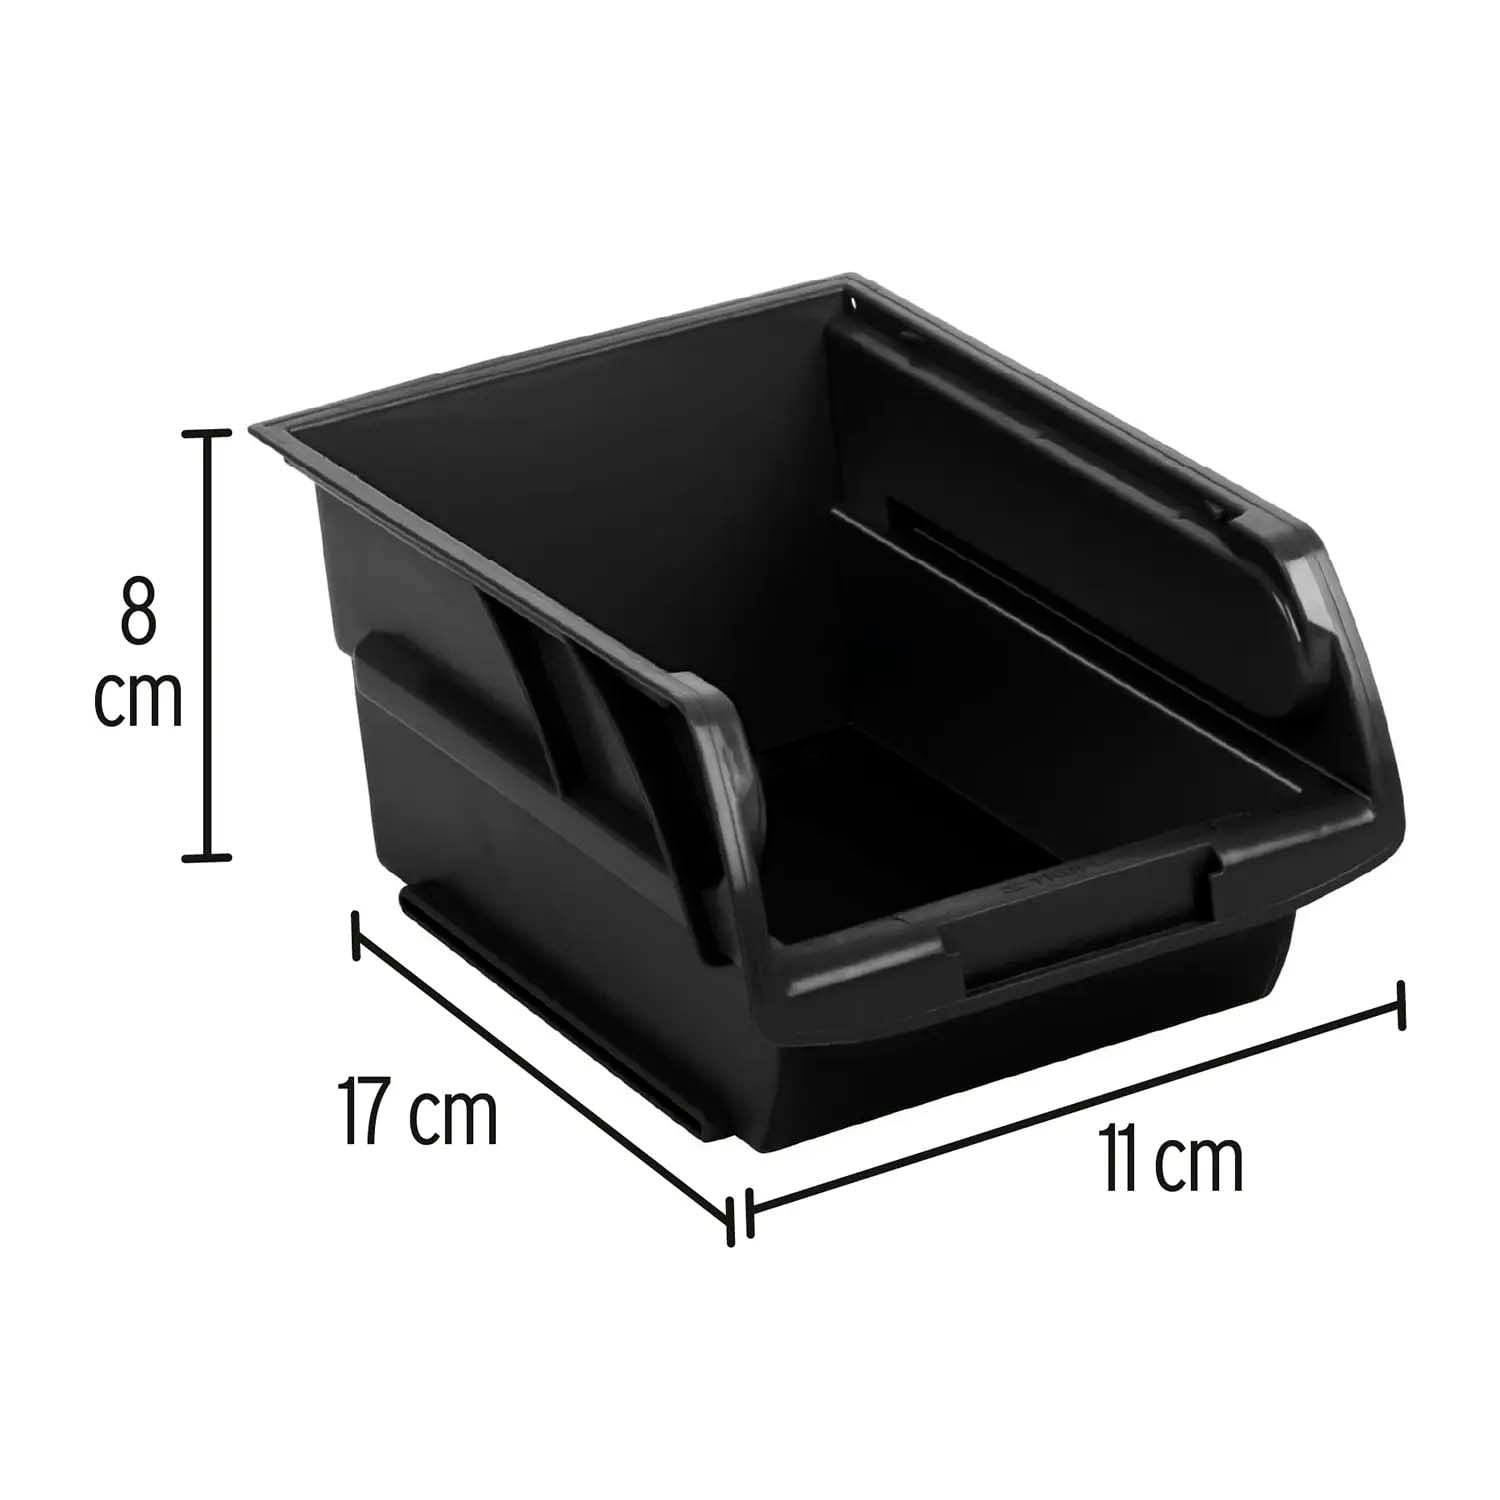 10 Gavetas Plástica Caja Organizador Apilable 1plh 10x8,6x16